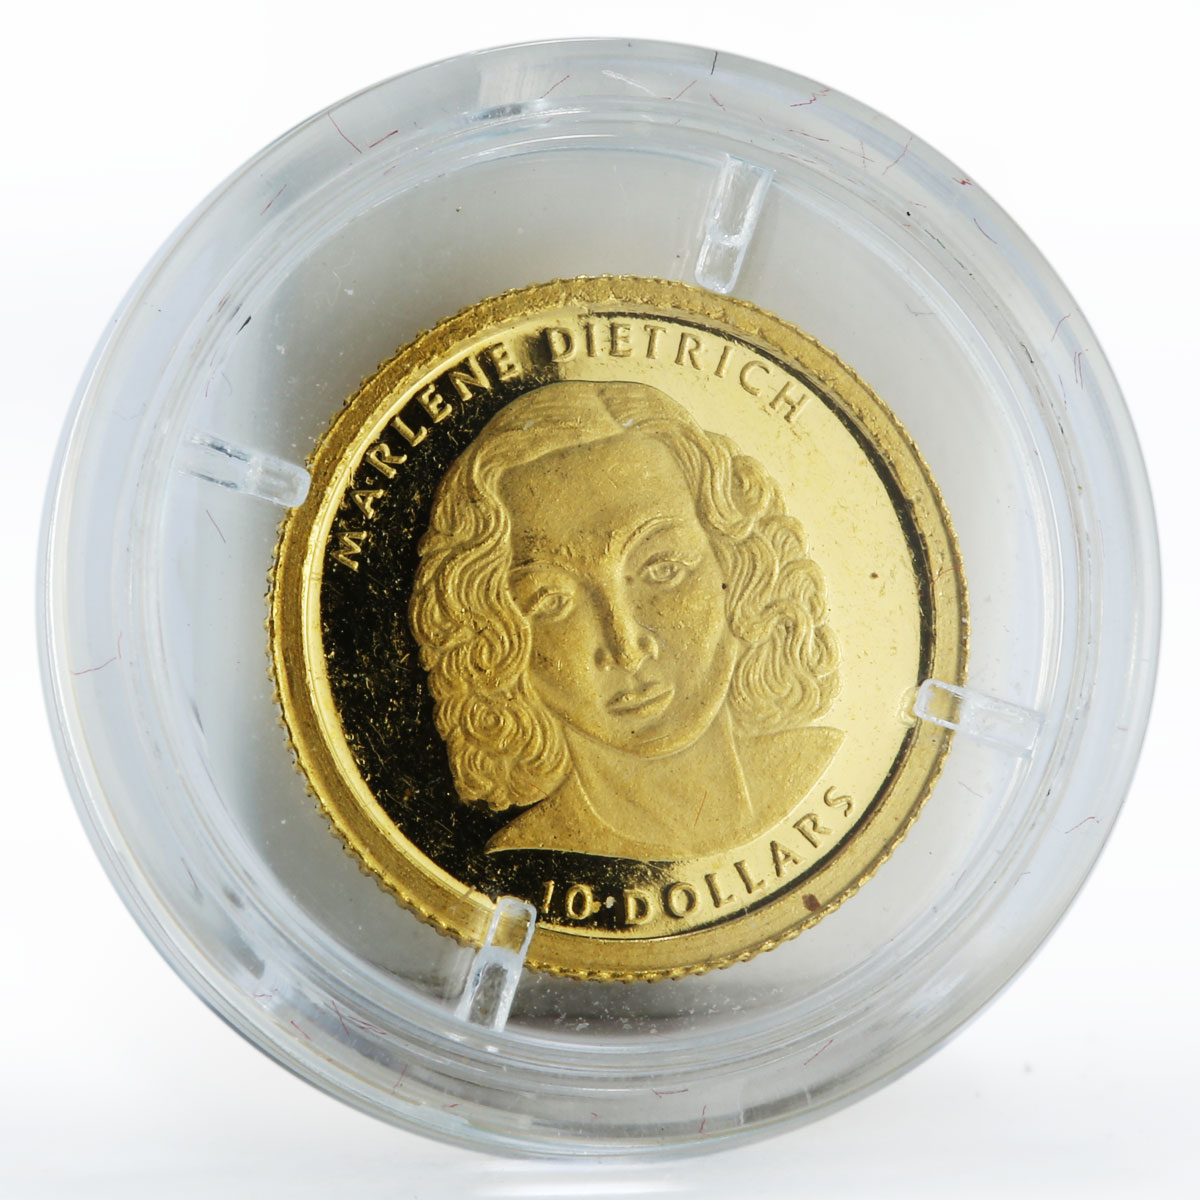 Liberia 10 dollars Marlene Dietrich proof gold coin 2001